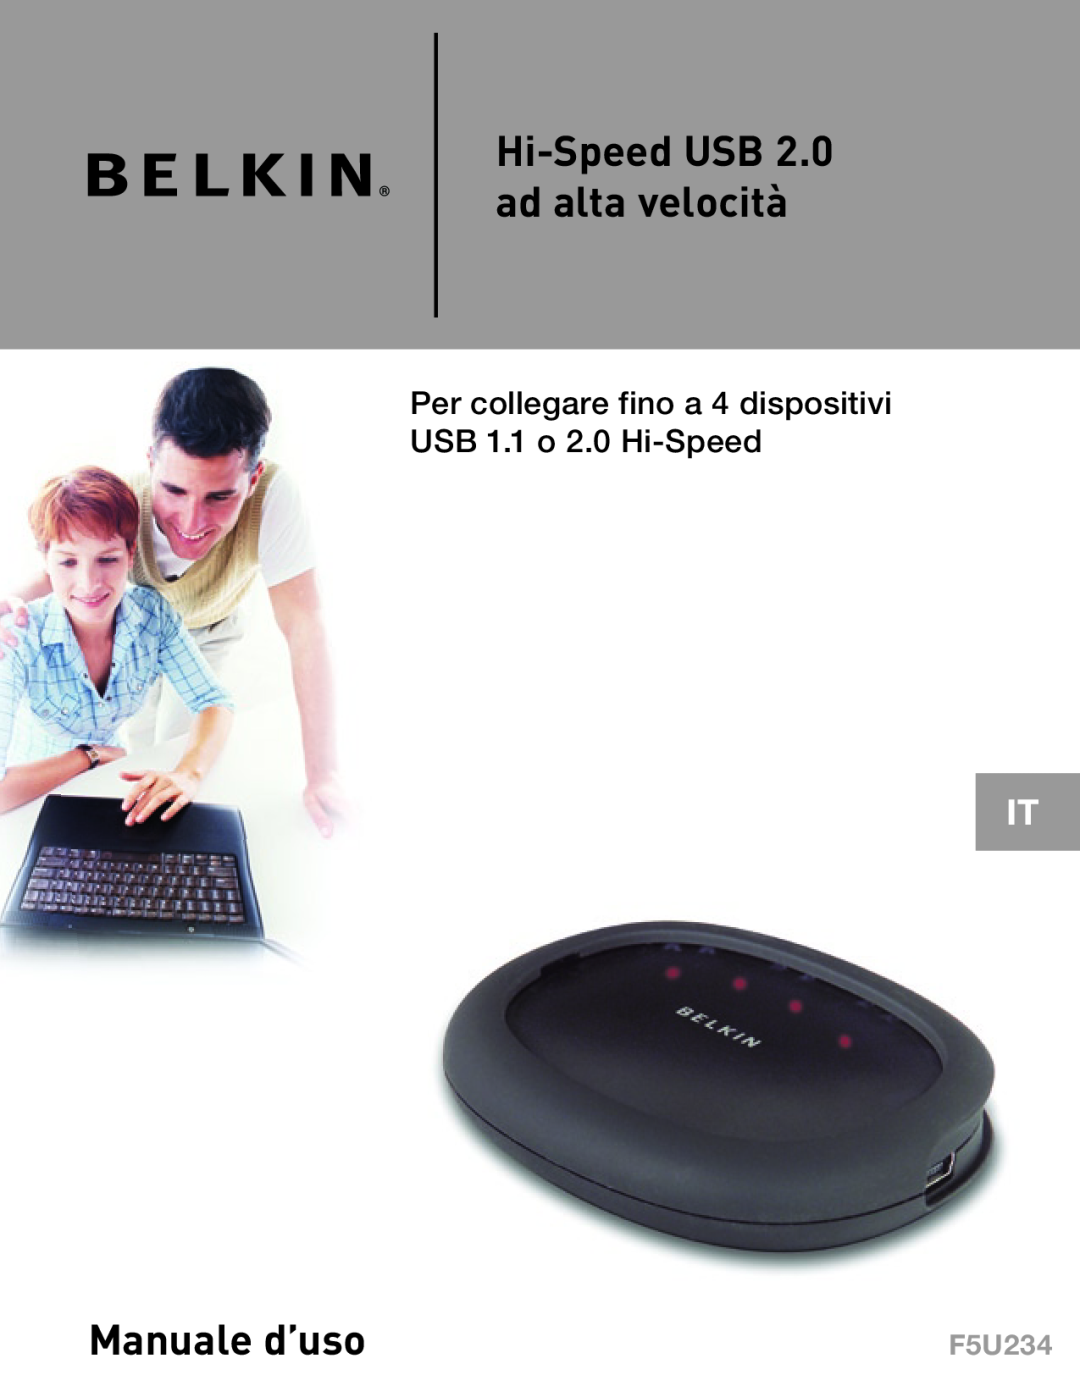 Belkin F5U234 Manuale d’uso, Per collegare fino a 4 dispositivi USB 1.1 o 2.0 Hi-Speed, Hi-Speed USB 2.0 ad alta velocità 